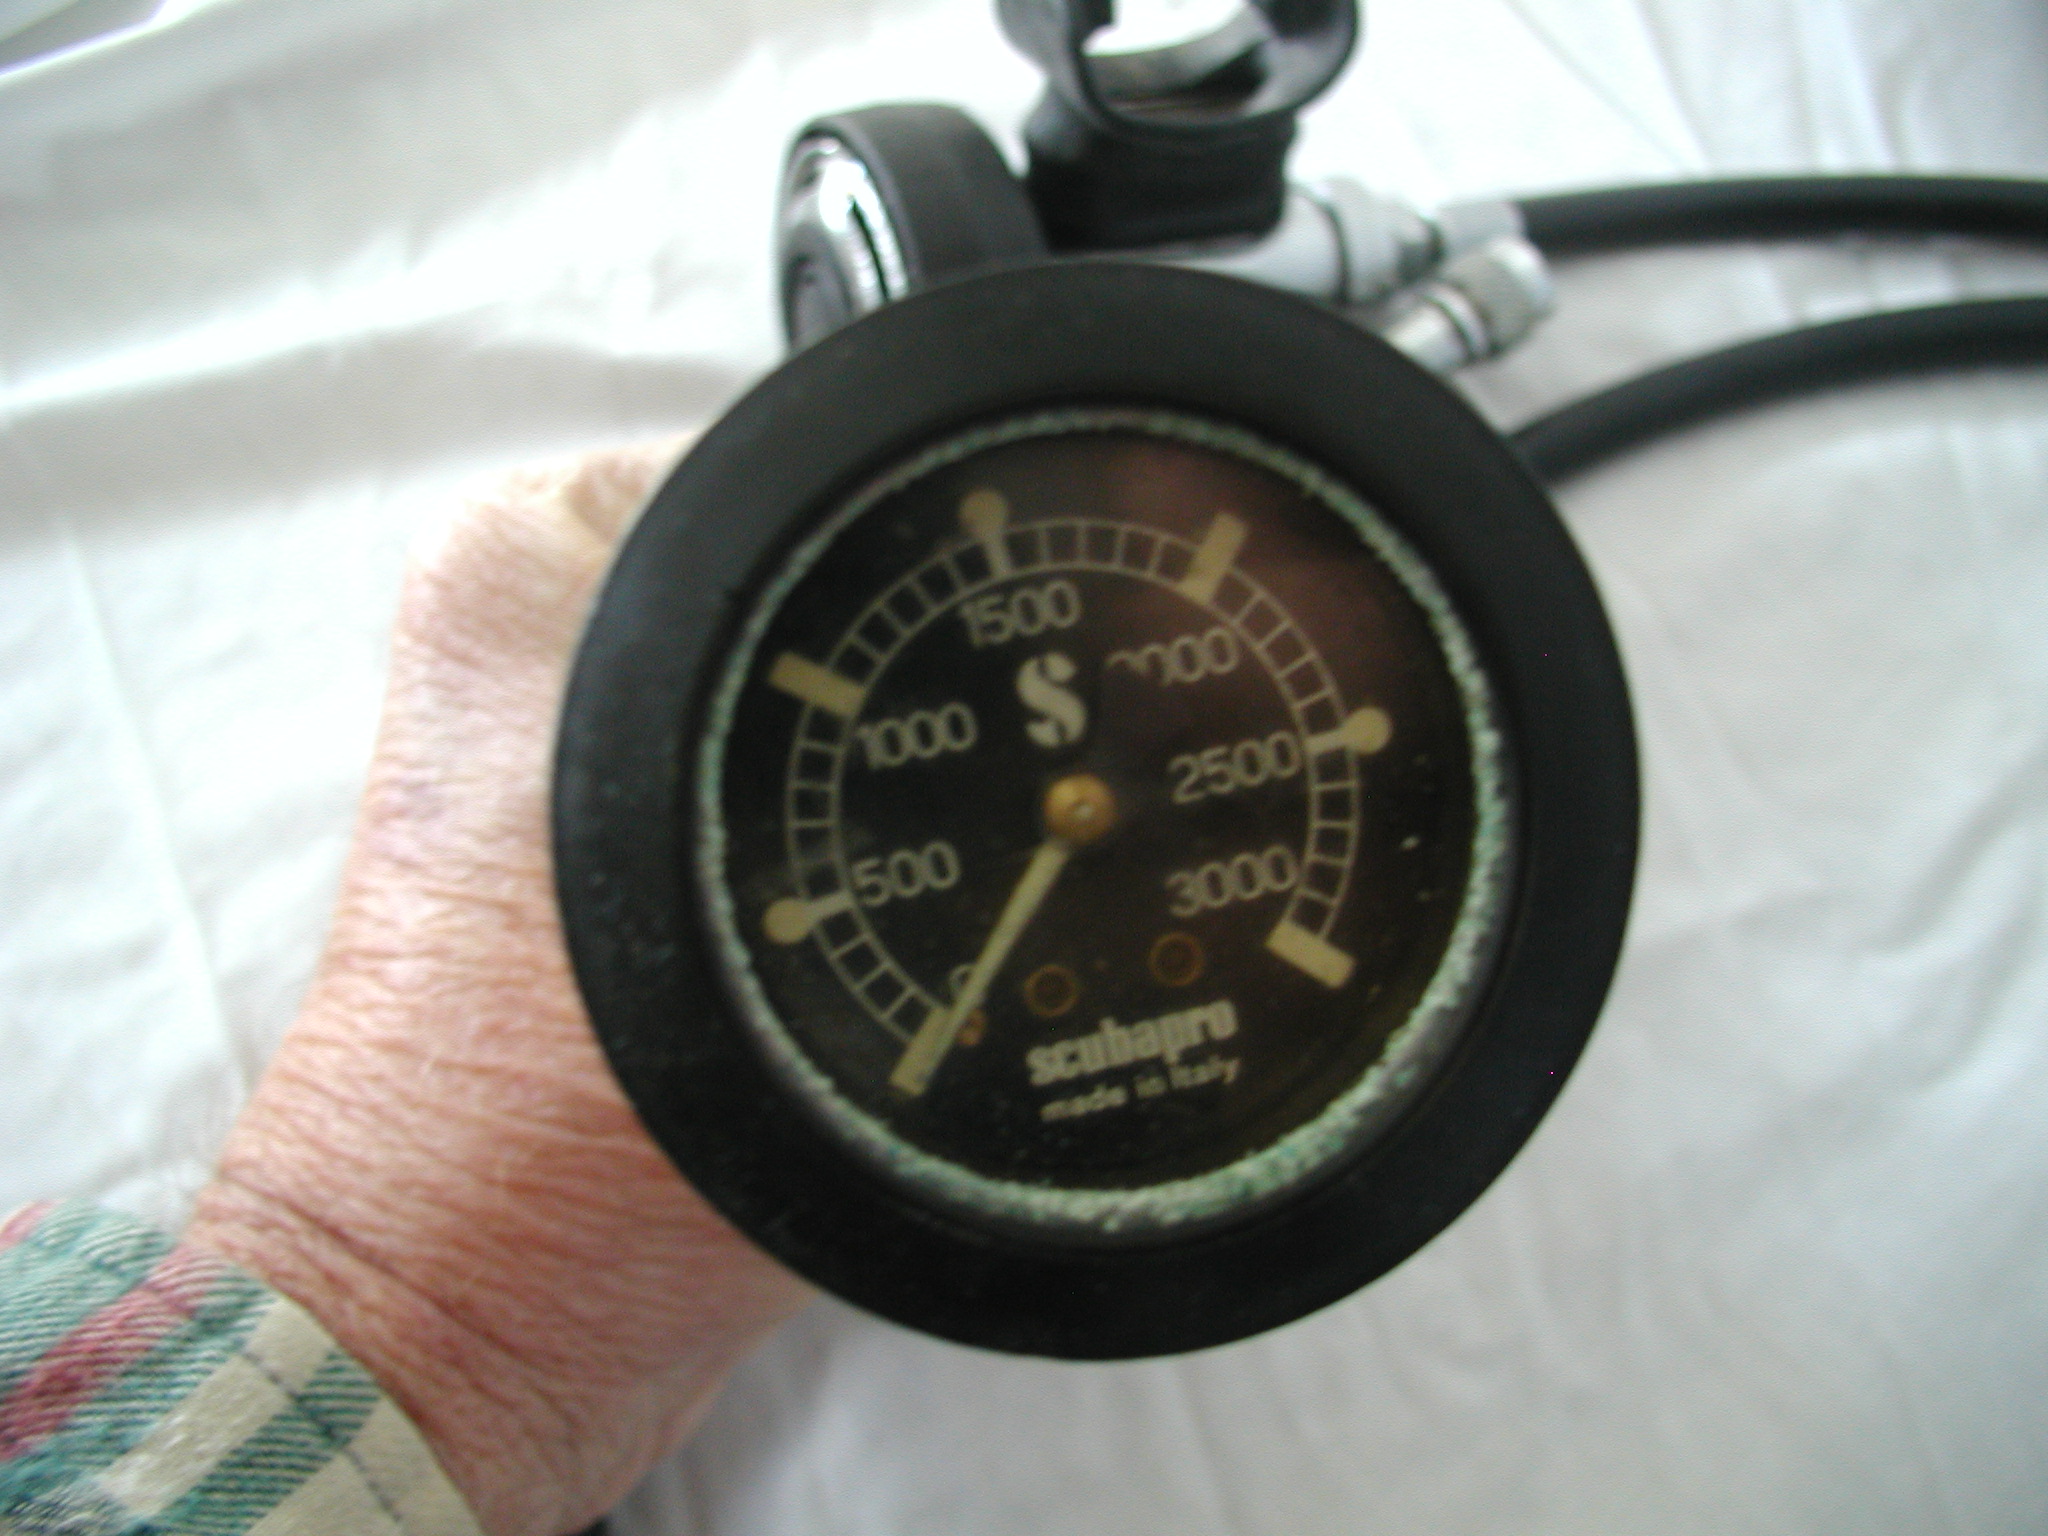 Scubapro pressure gauge